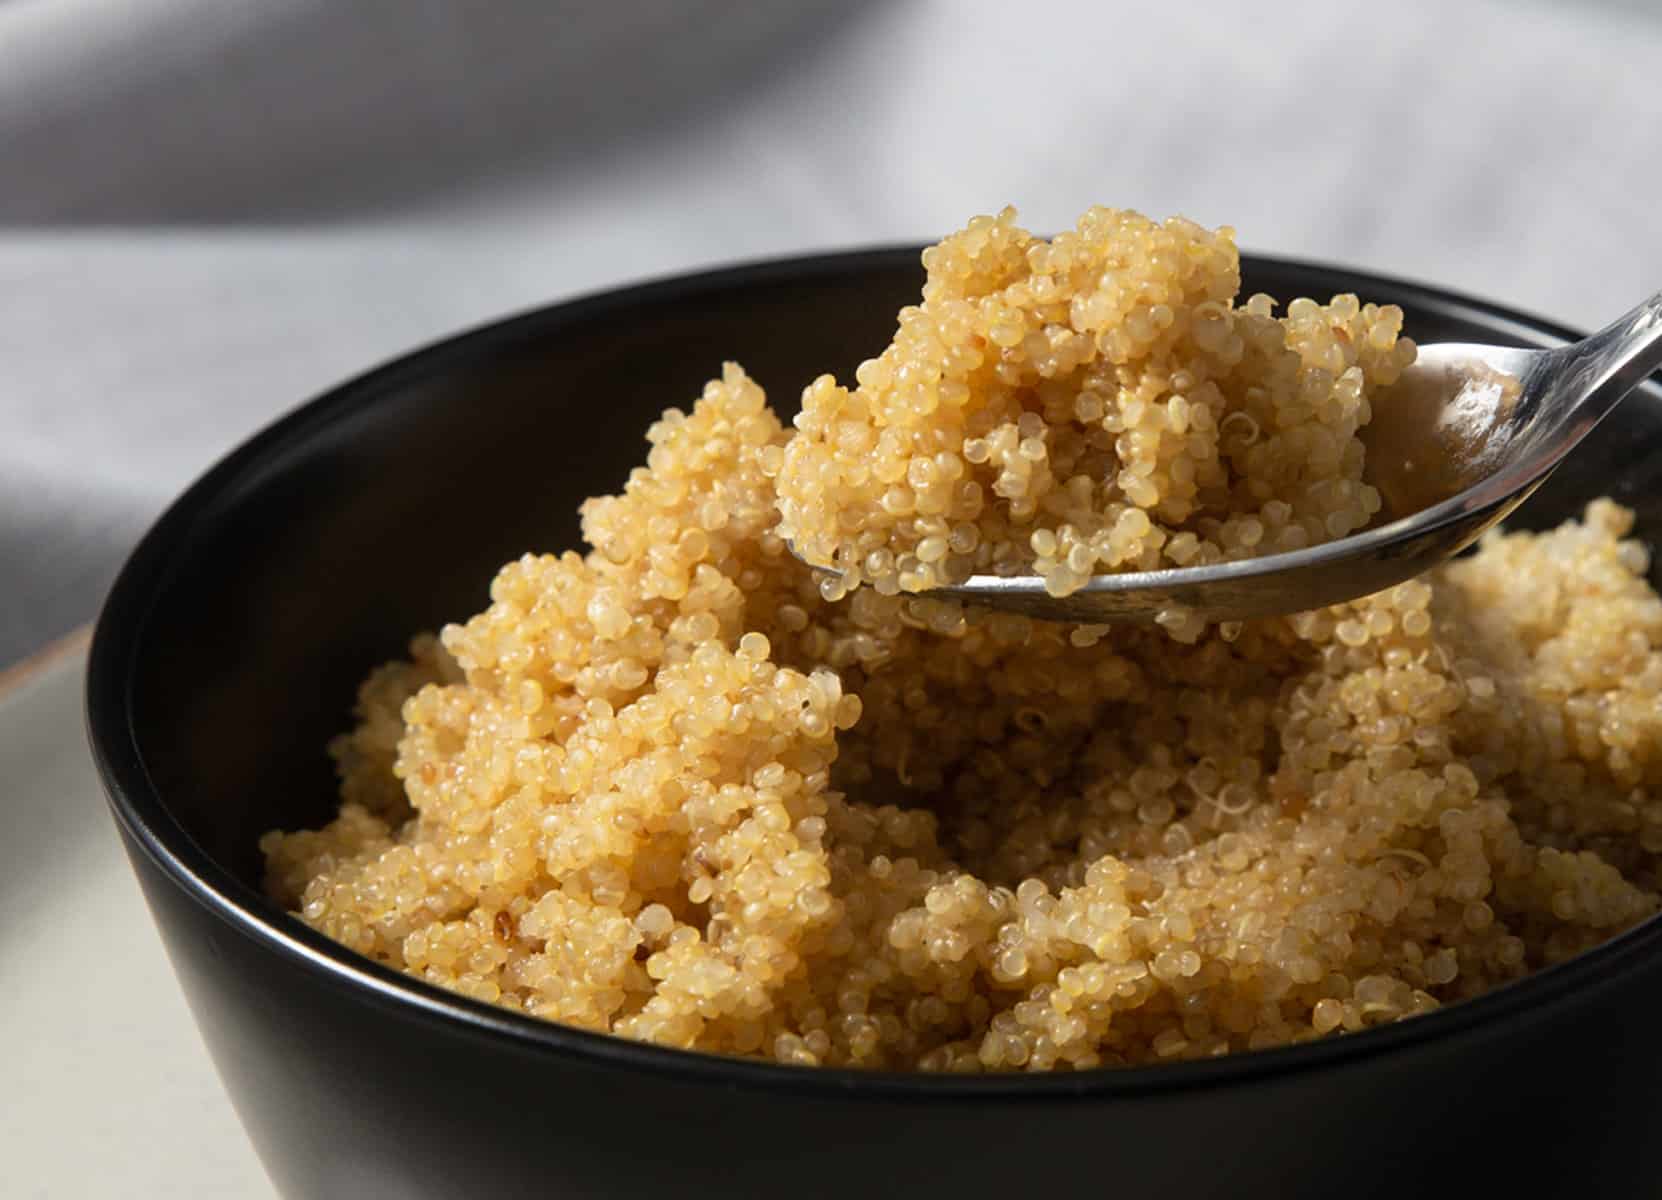 https://www.pressurecookrecipes.com/wp-content/uploads/2023/02/instant-pot-quinoa.jpg